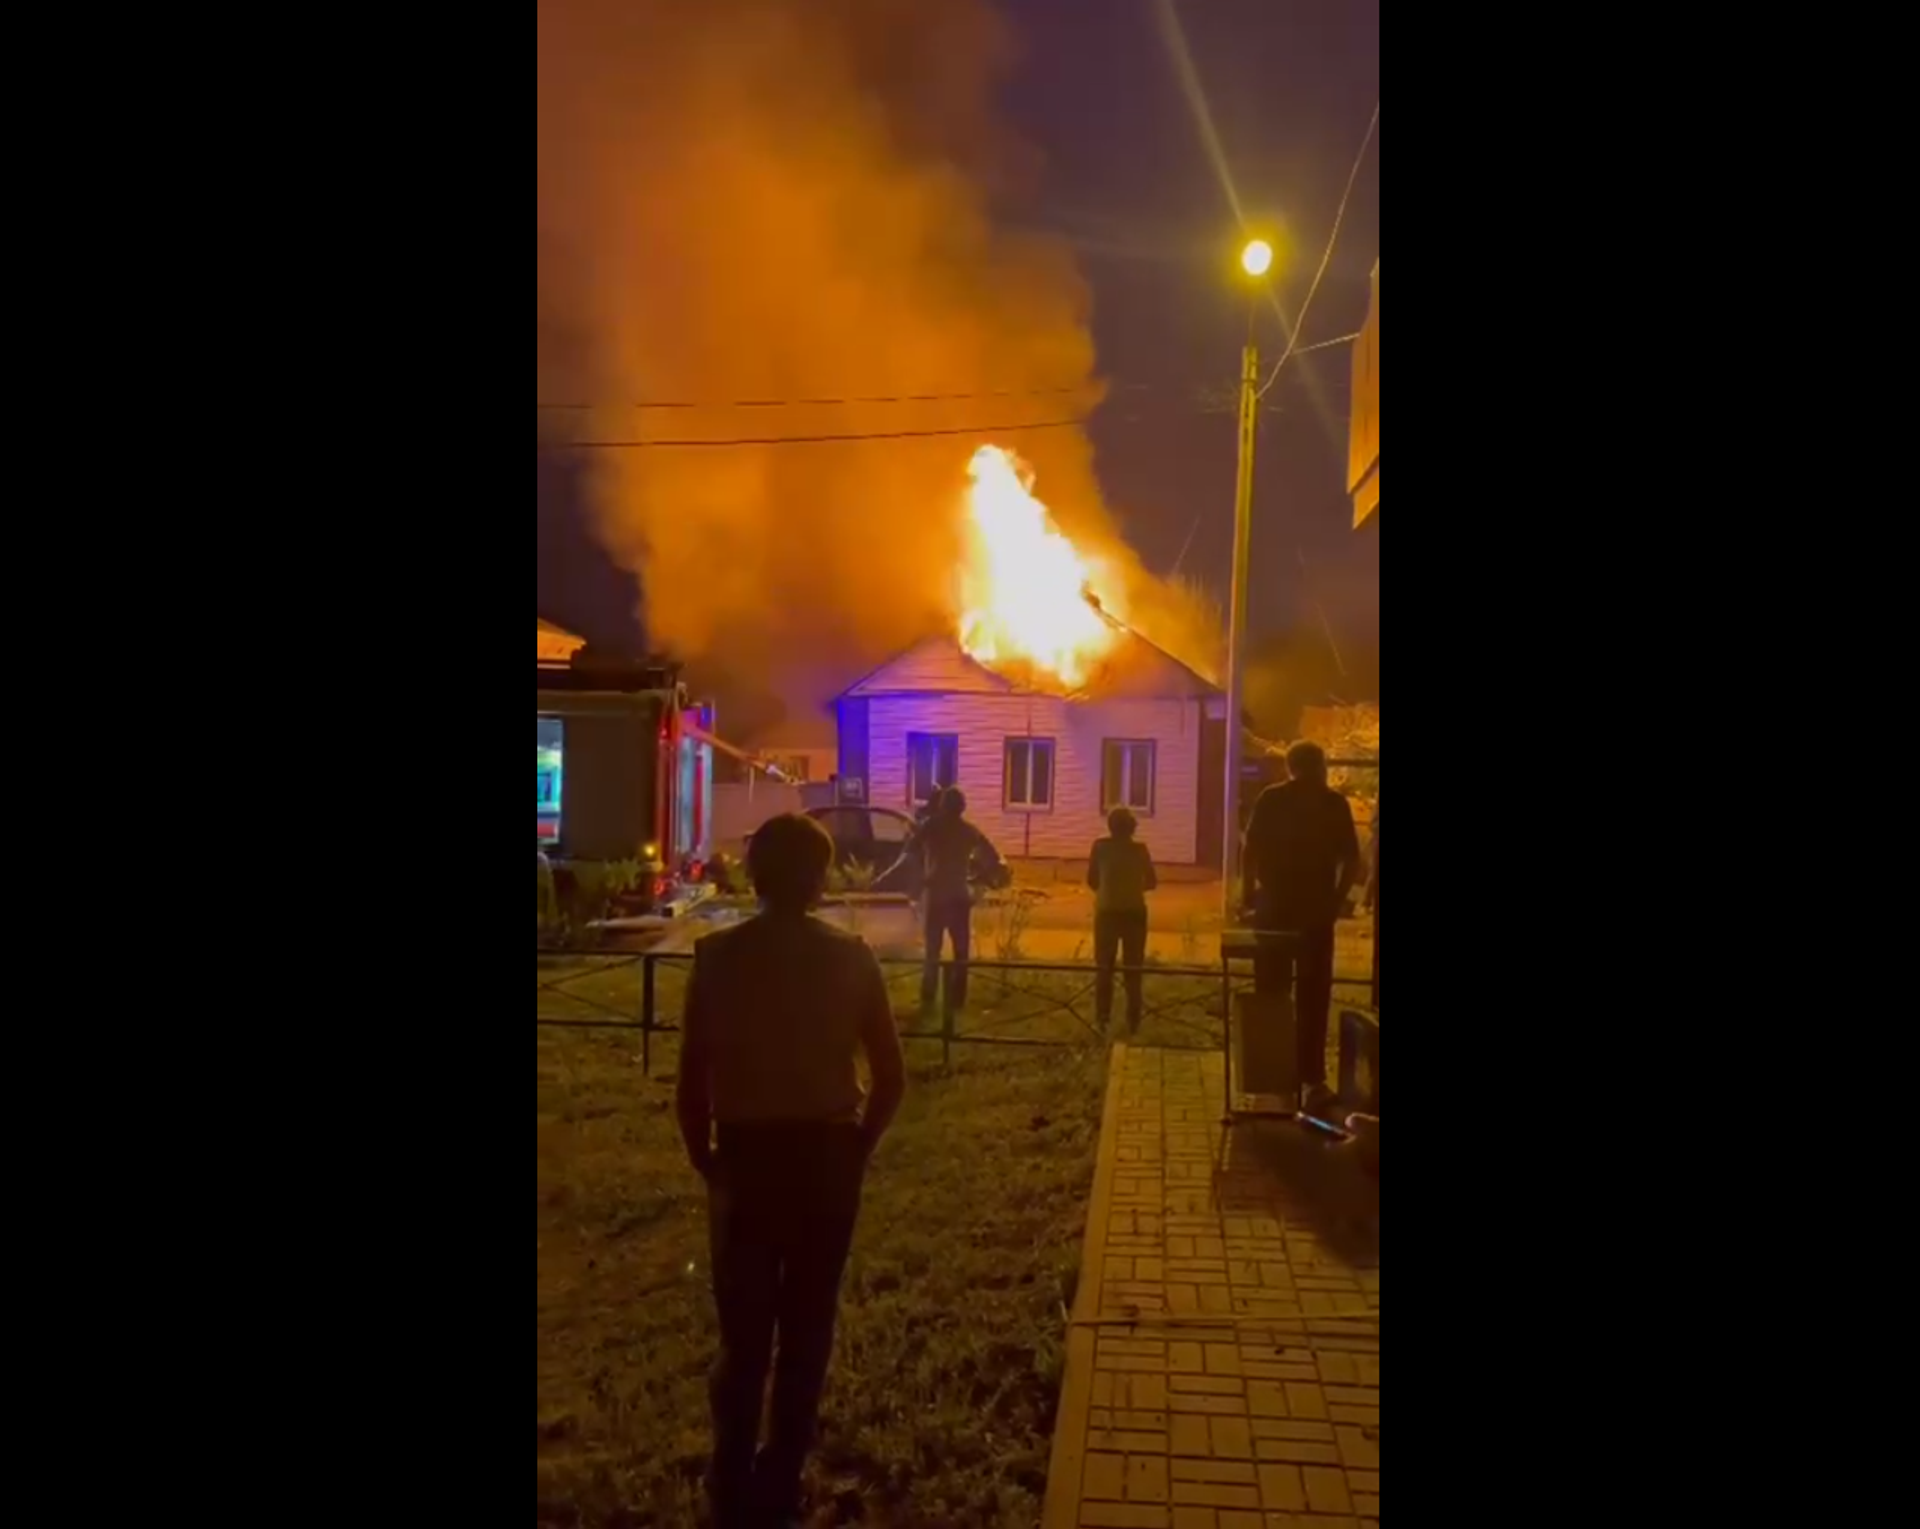 A screenshot from a social media video showing a house on fire allegedly in Belgorod, Russia, on July 3, 2022. - Sputnik International, 1920, 03.07.2022